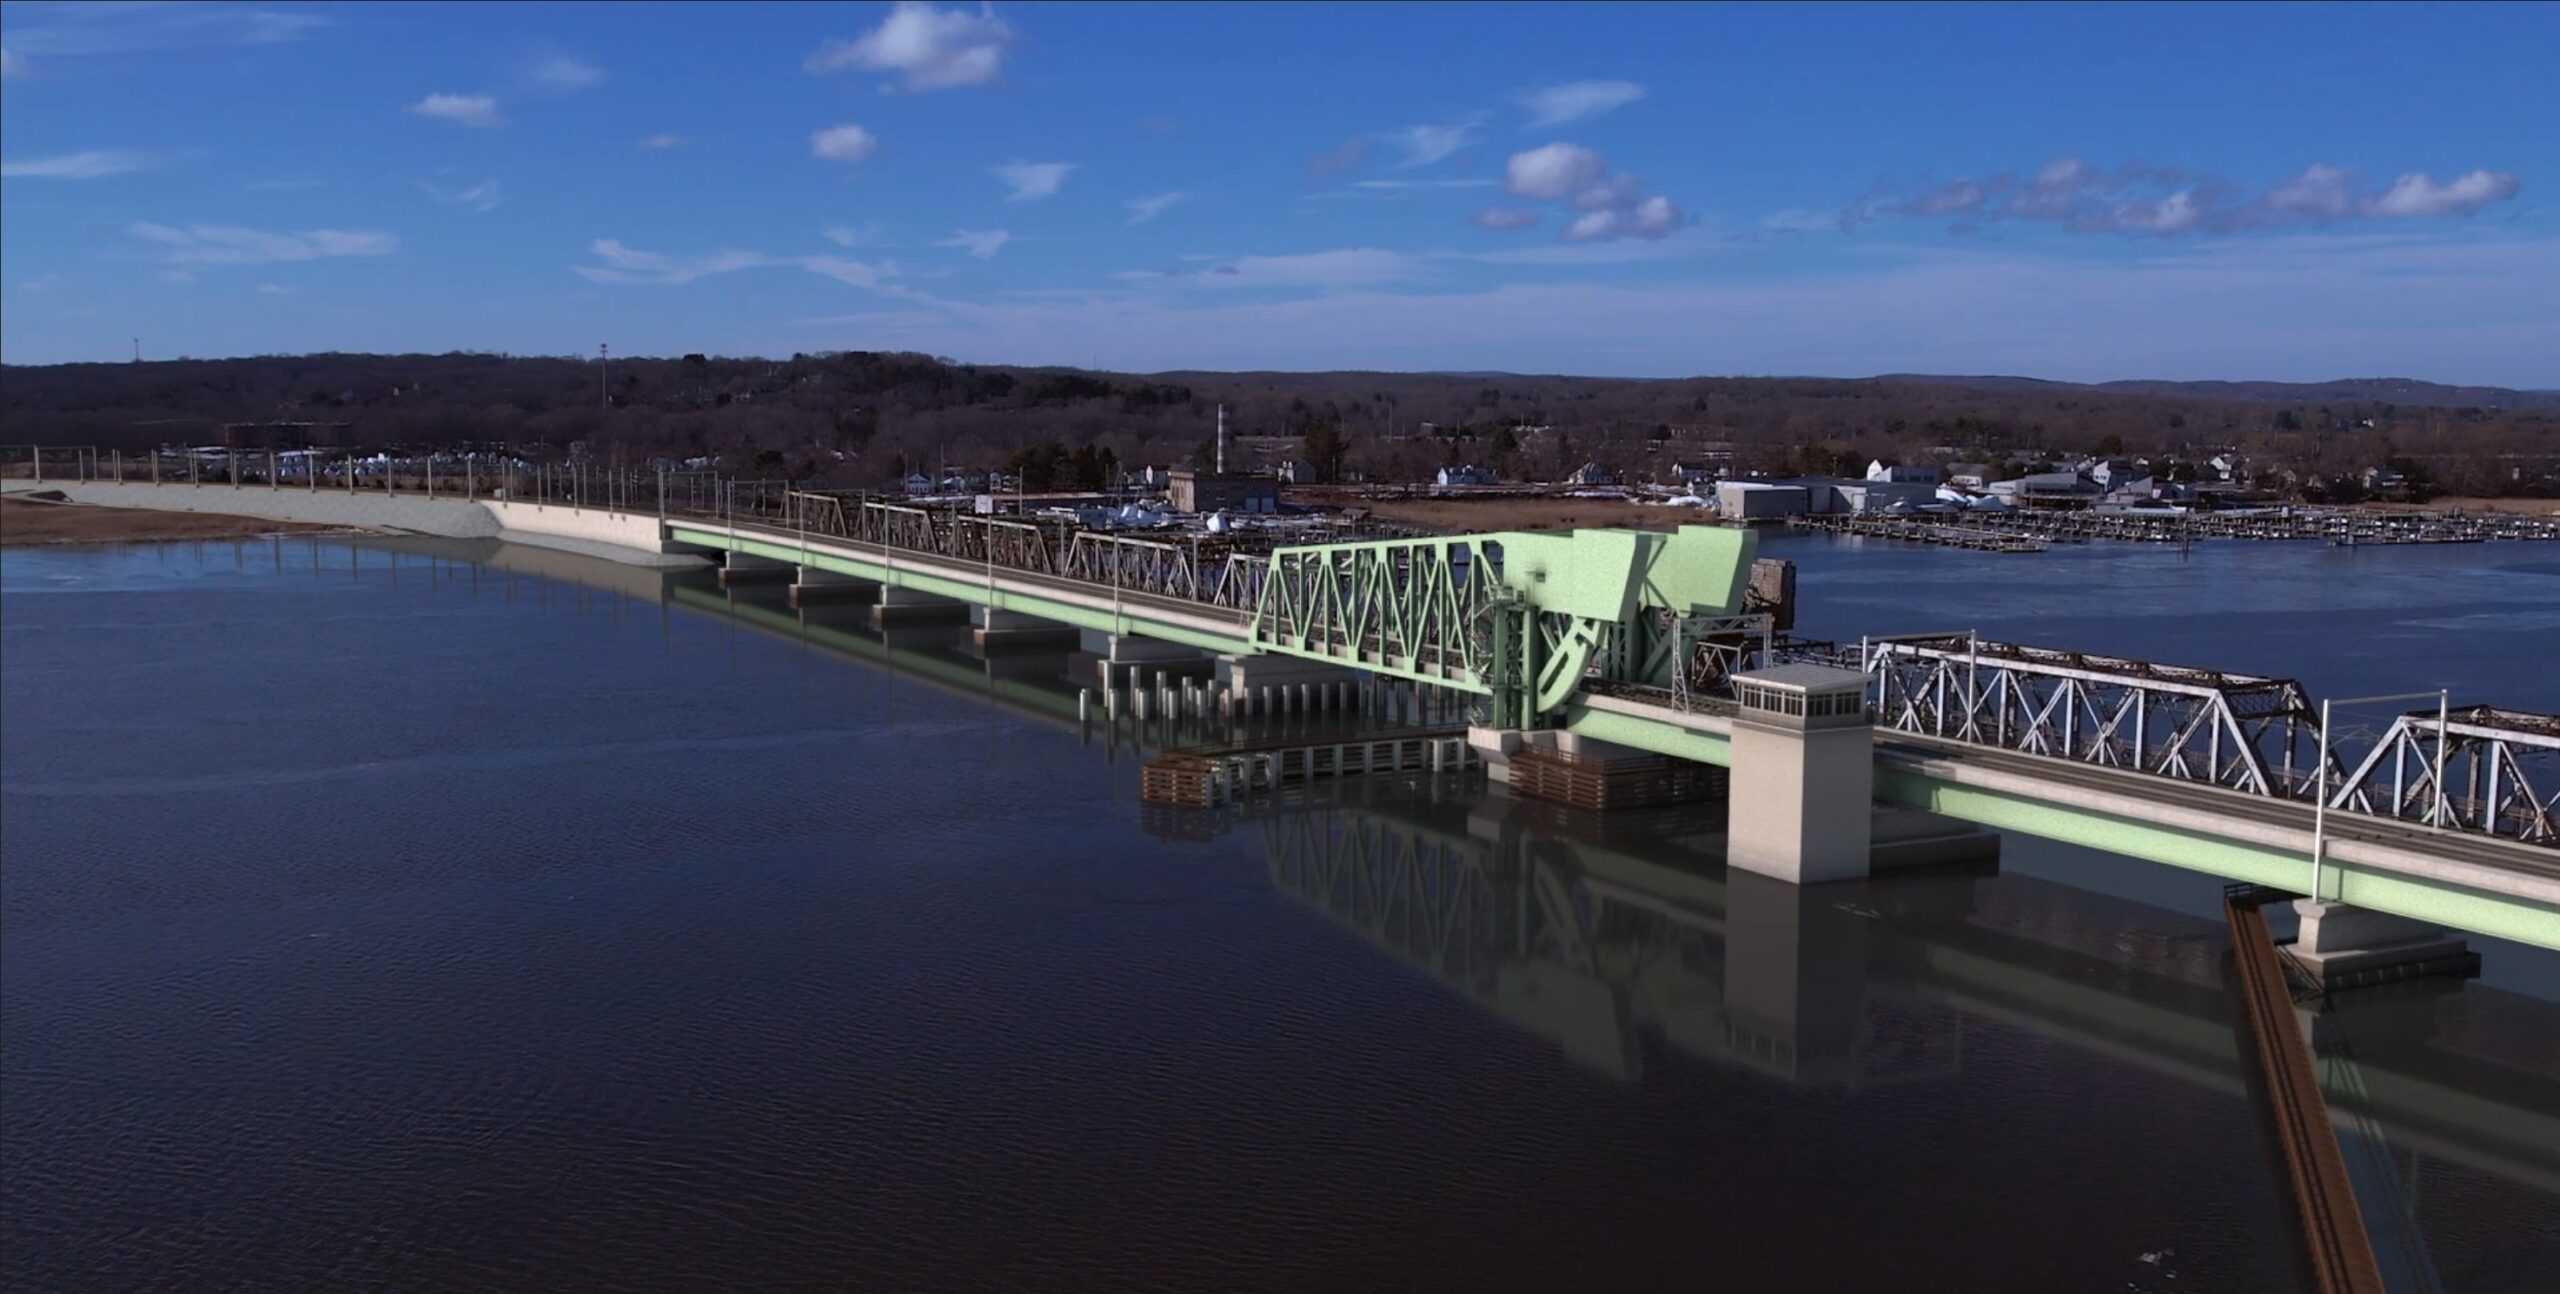 Amtrak awards contract to build new Connecticut River Bridge